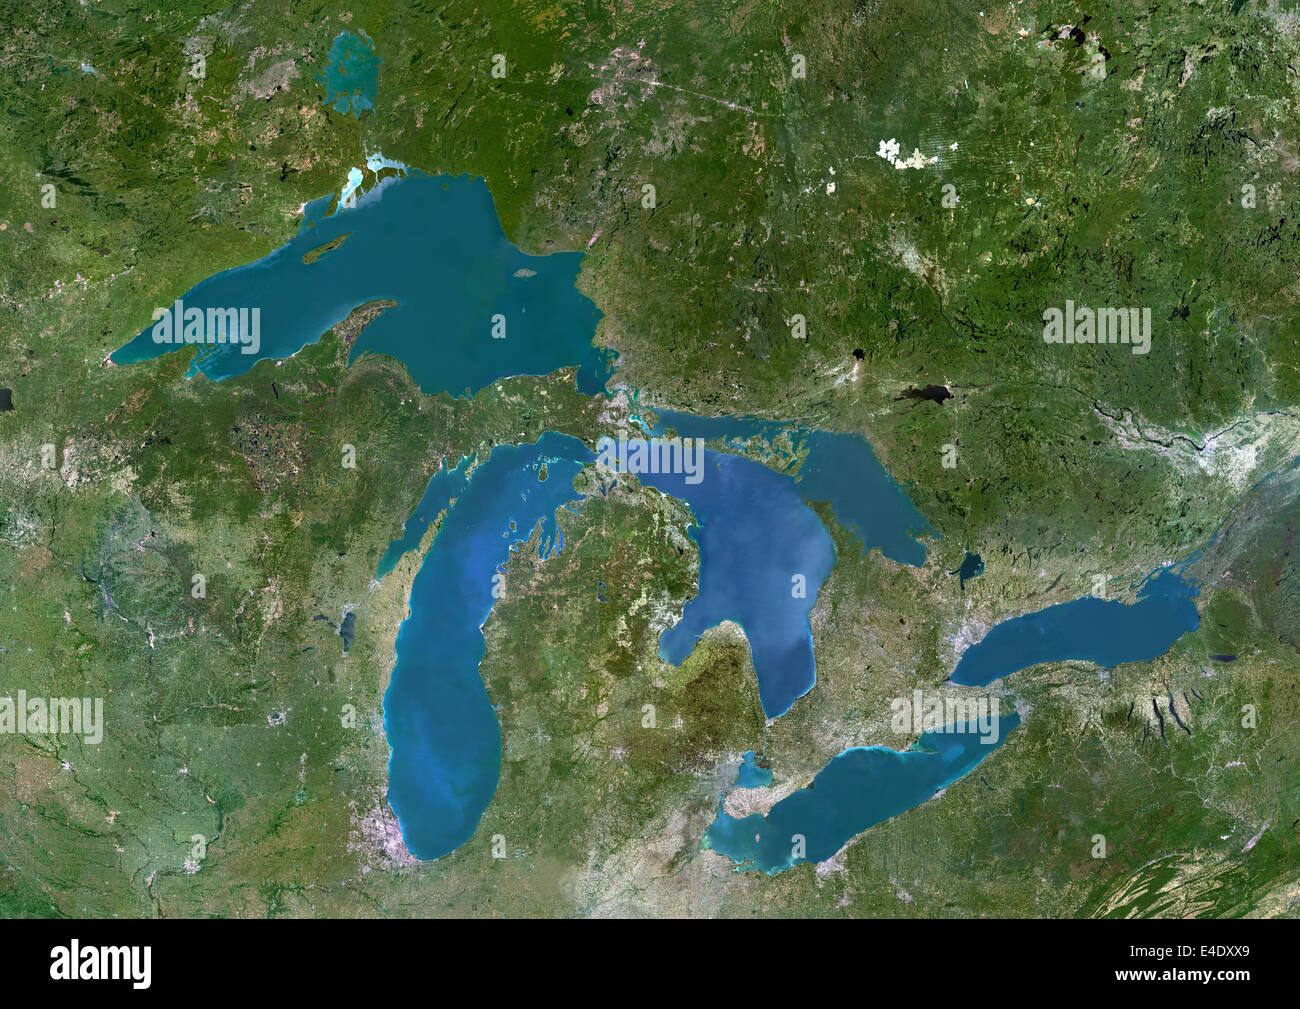 Great Lakes, North America, True Colour Satellite Image. True colour satellite image of the Great Lakes region which includes th Stock Photo